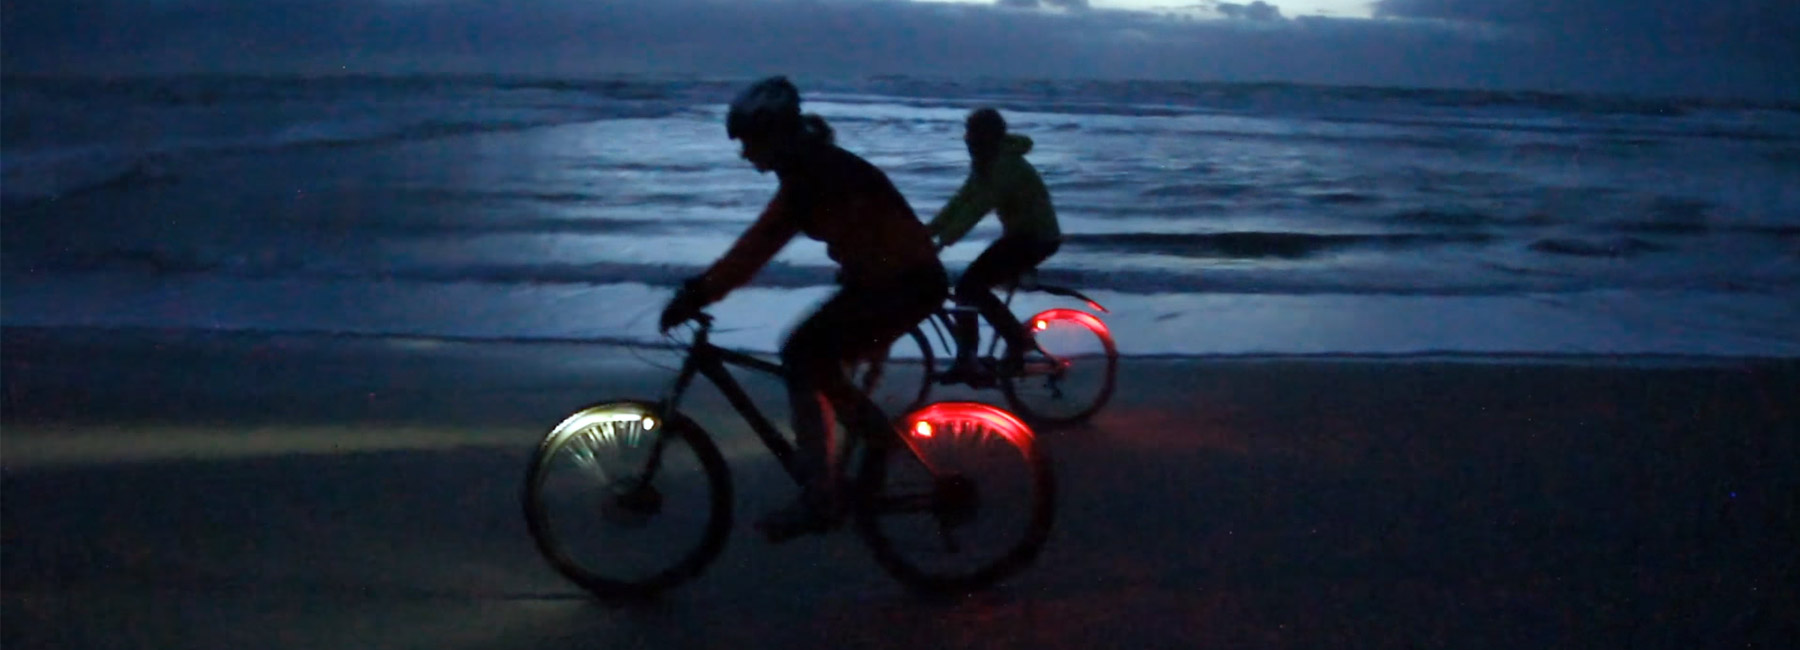 magnic-microlights-bike-design-designboom1800.jpg